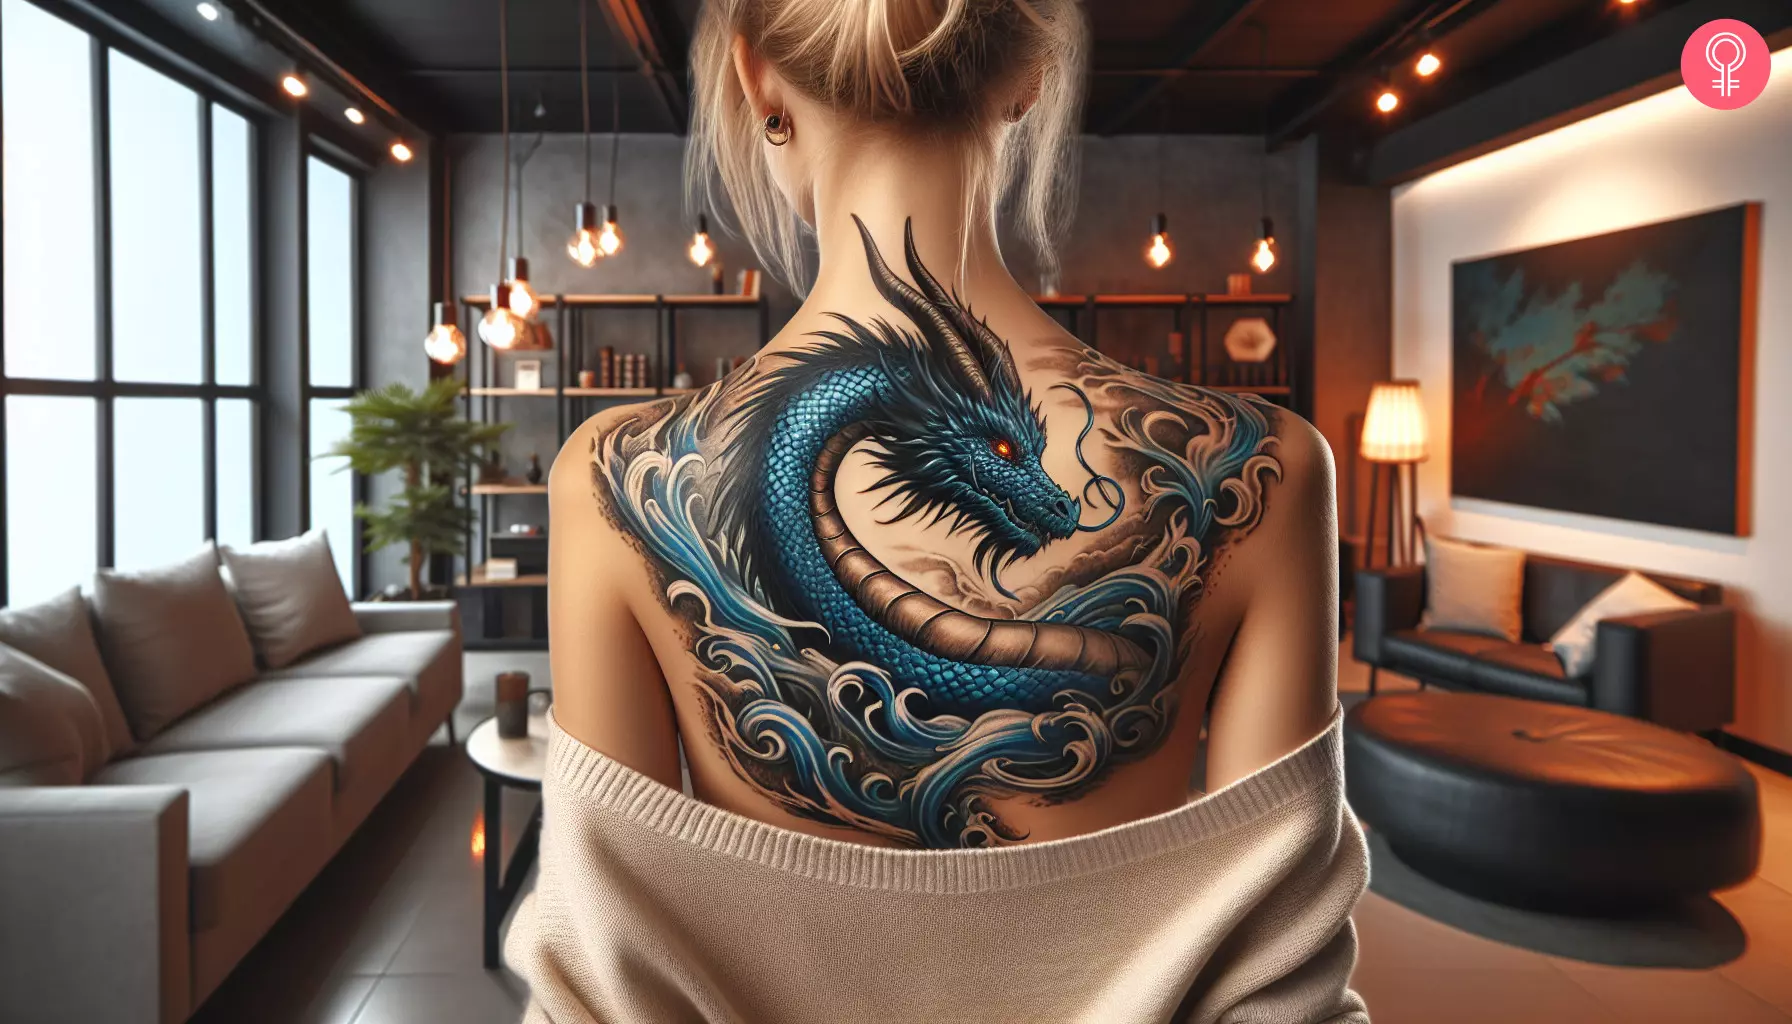 A striking blue dragon tattoo on the upper back